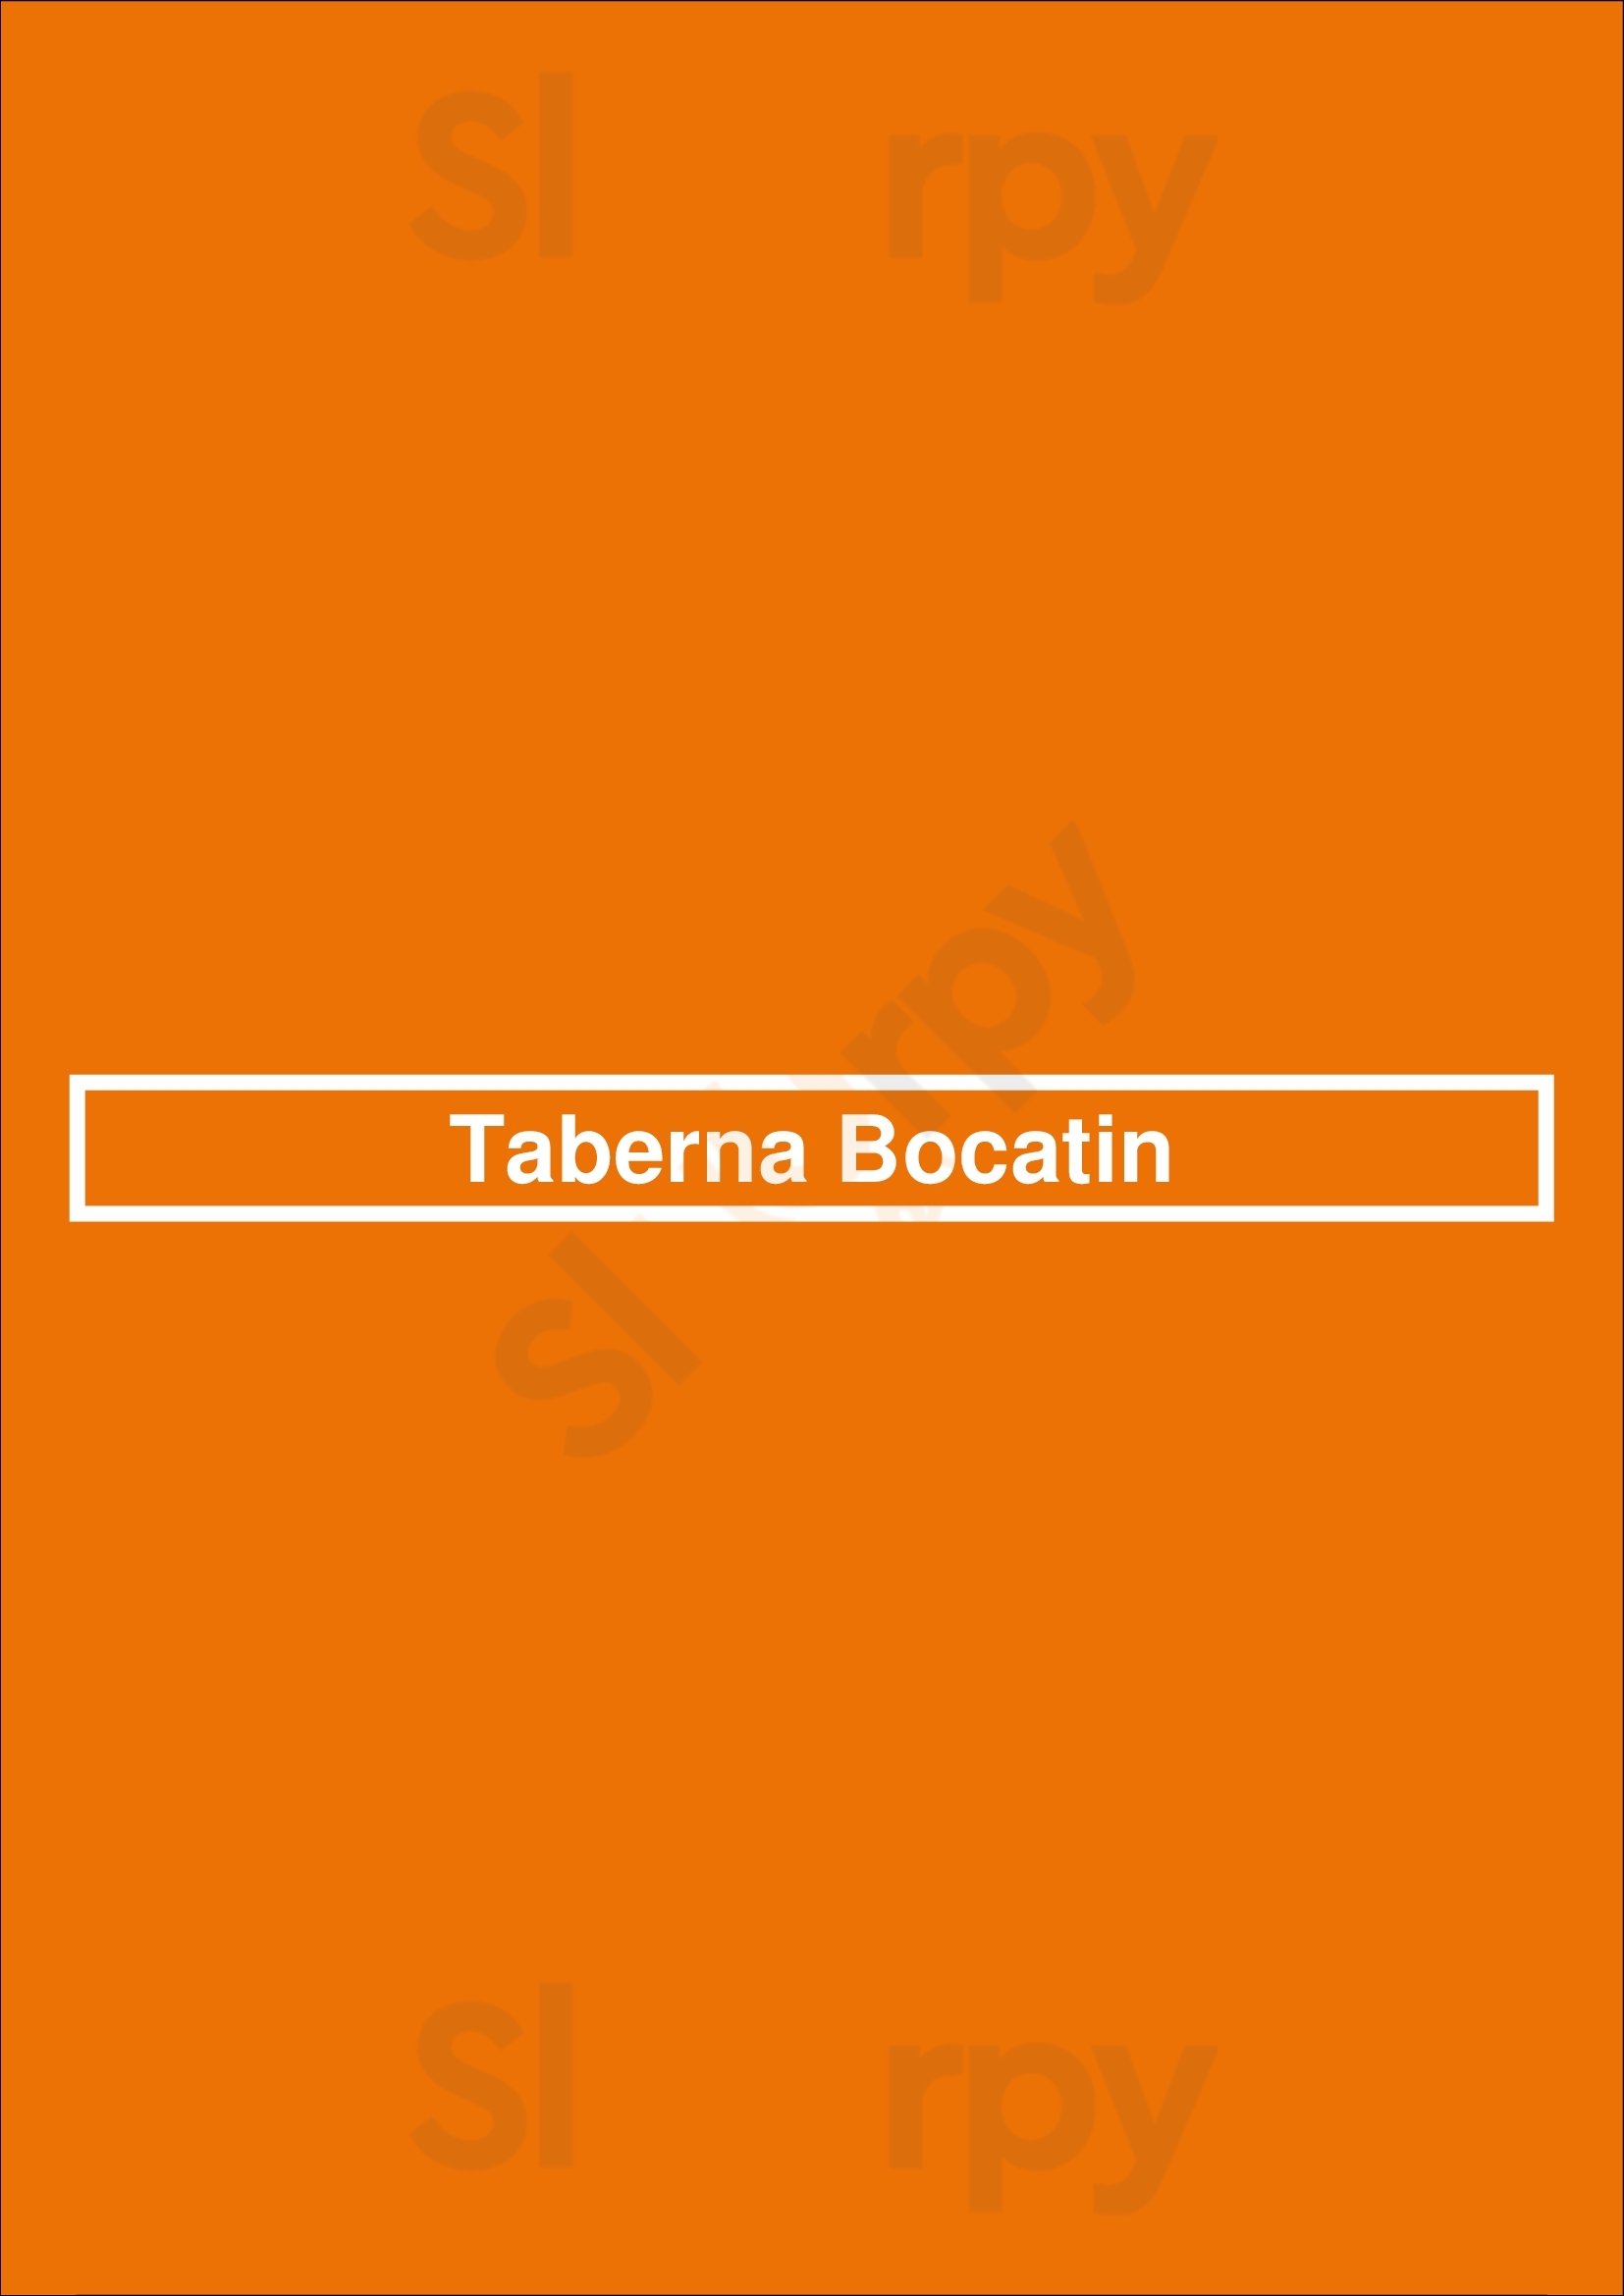 Taberna Bocatin Fátima Menu - 1